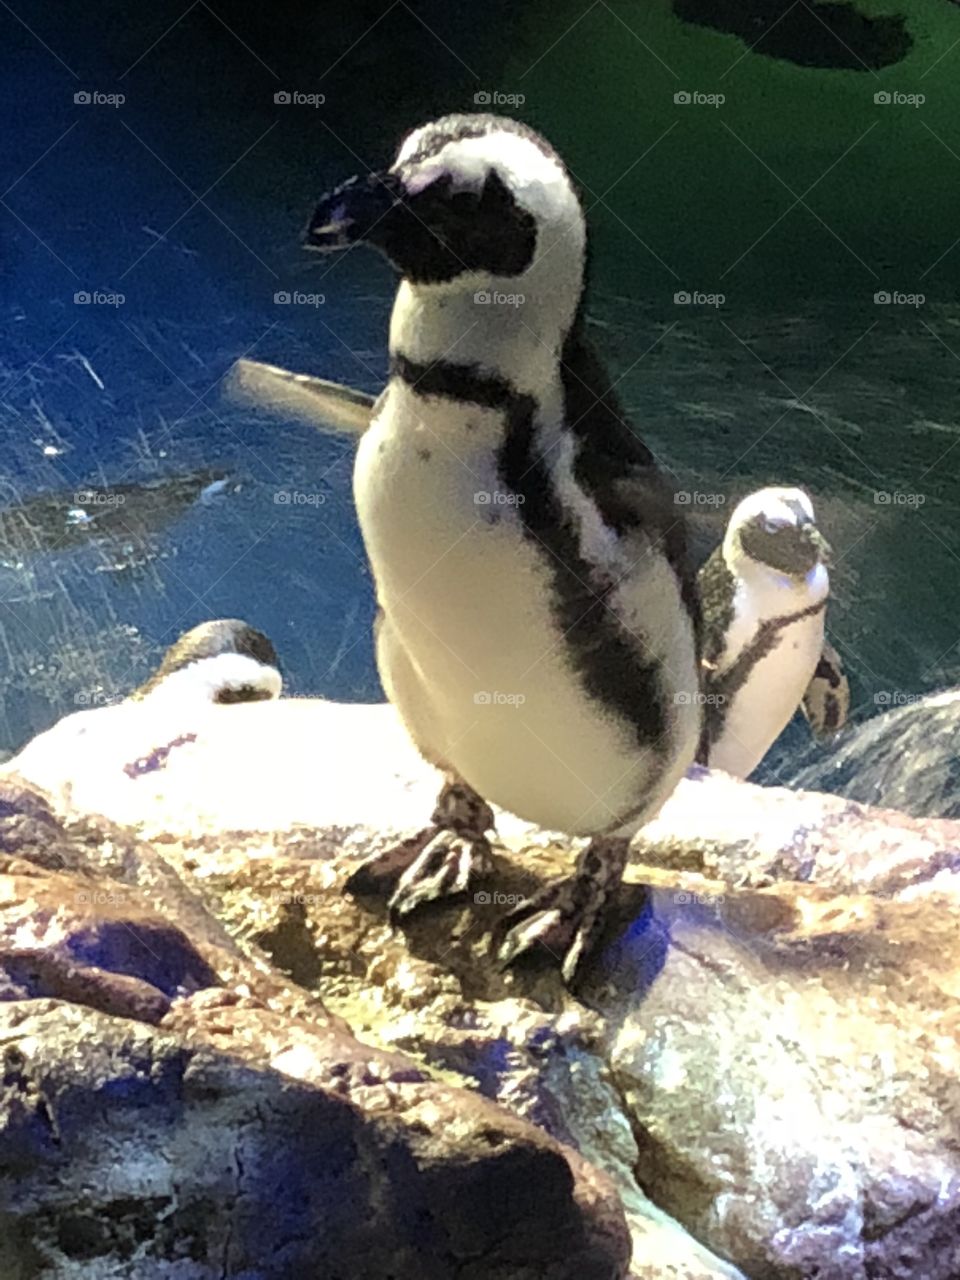 A penguin just shaking his feathers in Boston’s aquarium! 